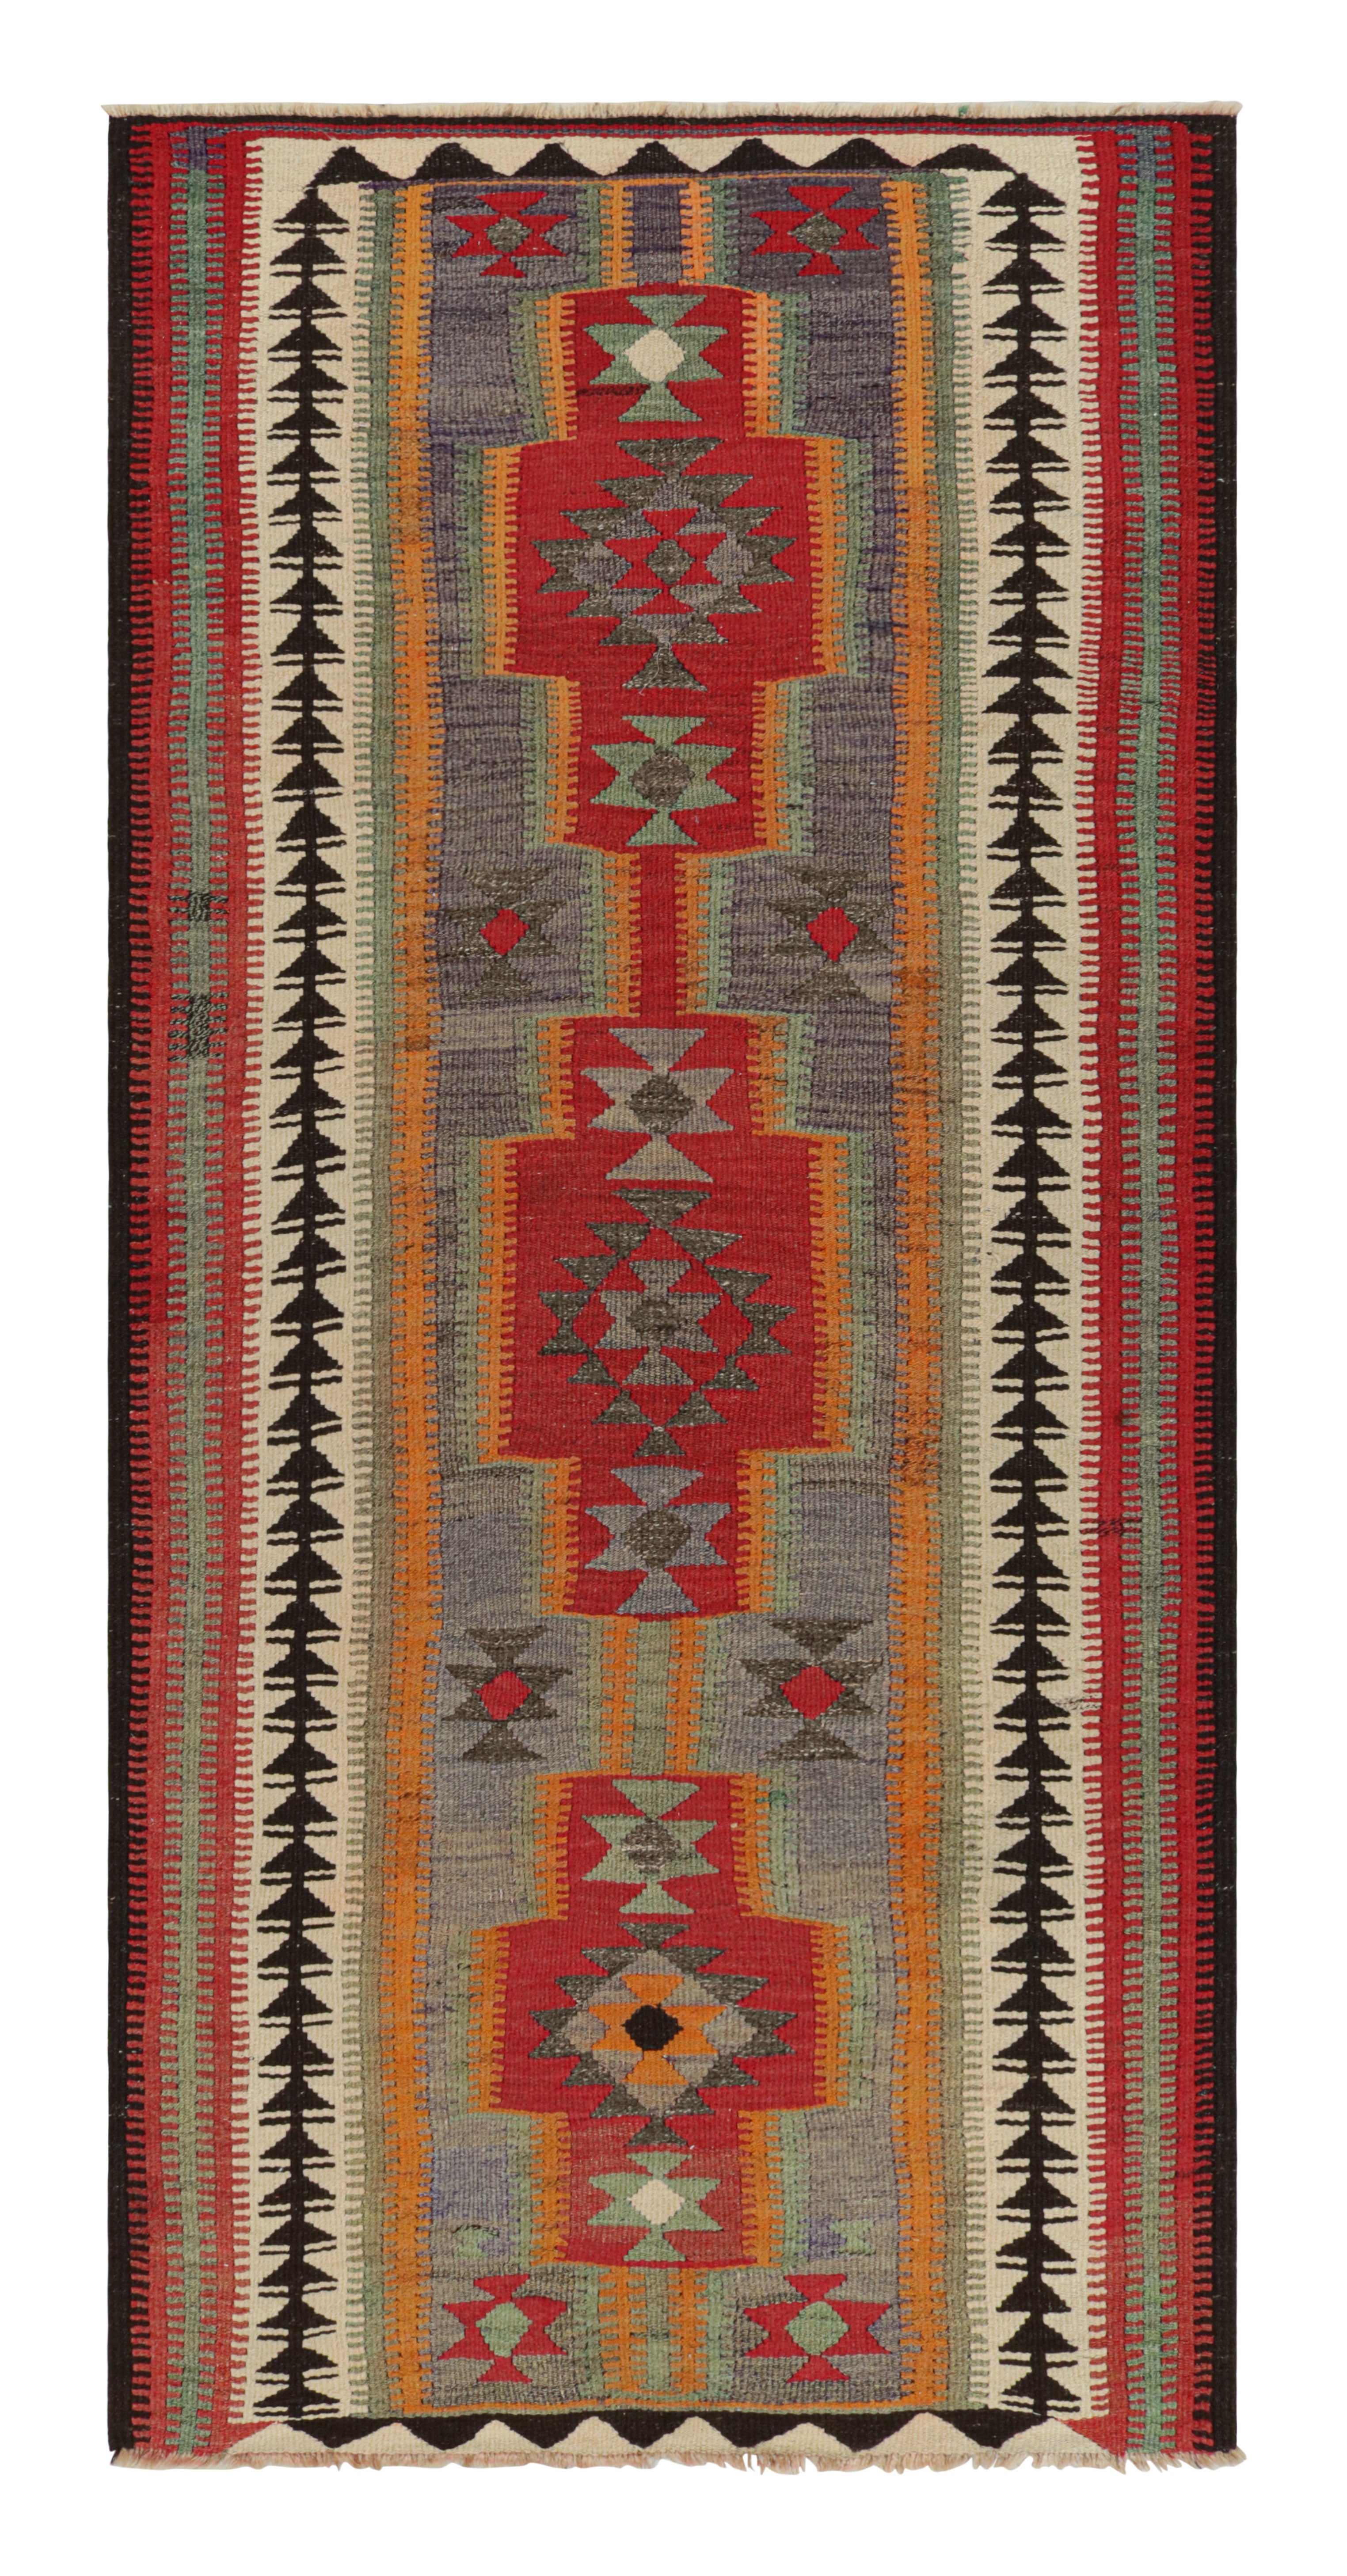 1950s Vintage Kilim rug in Red Blue, Multicolor Geometric Pattern by Rug & Kilim For Sale